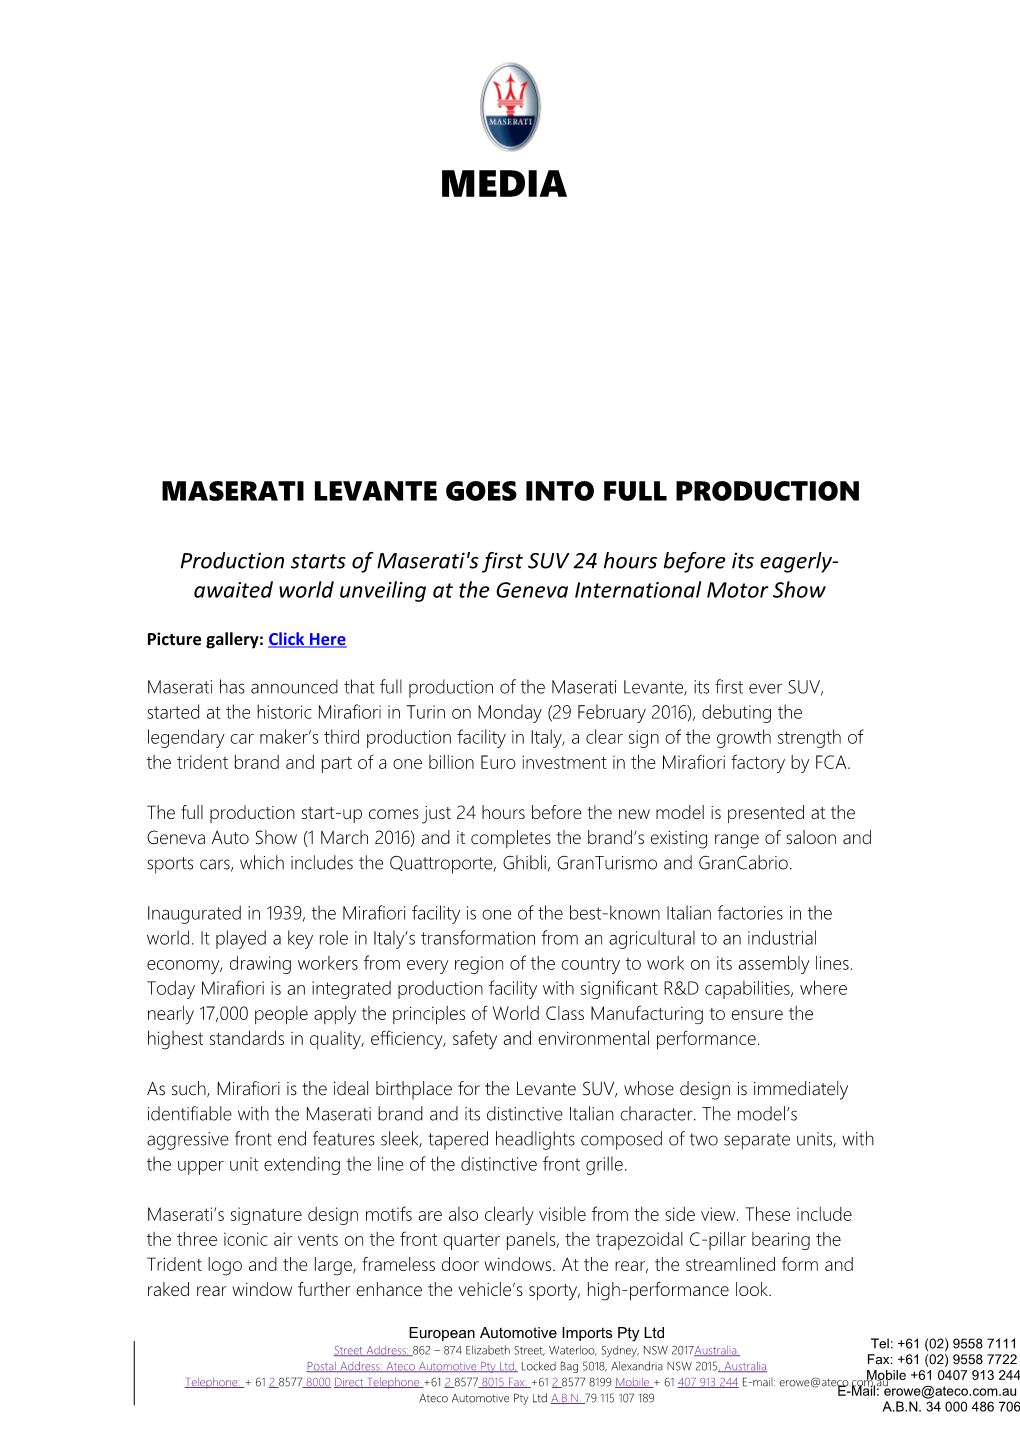 MASERATI LEVANTE Goes Into Full Production